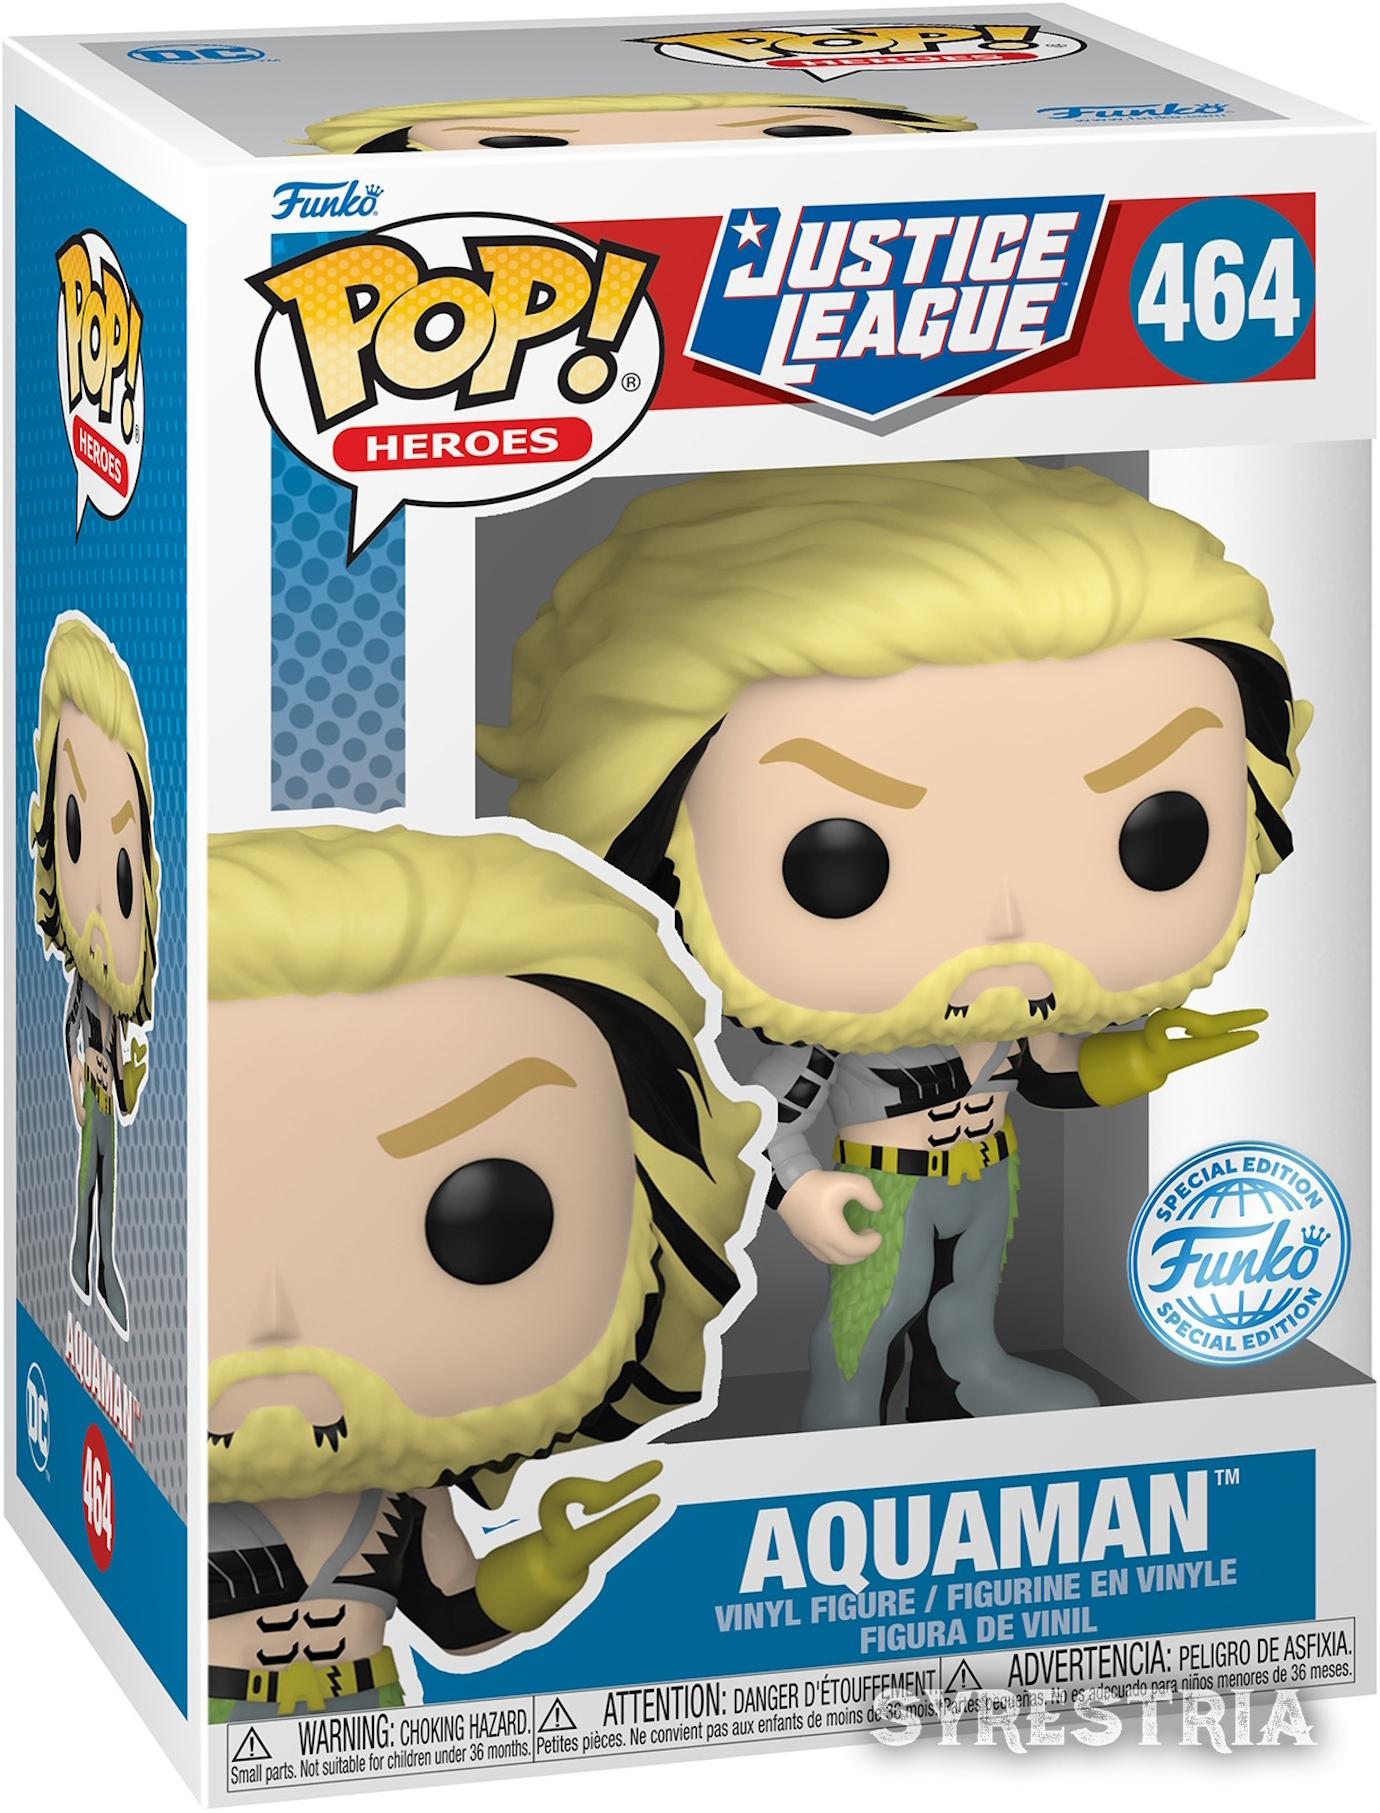 Justice League - Aquaman 464  Special Edition - Funko Pop! Vinyl Figur